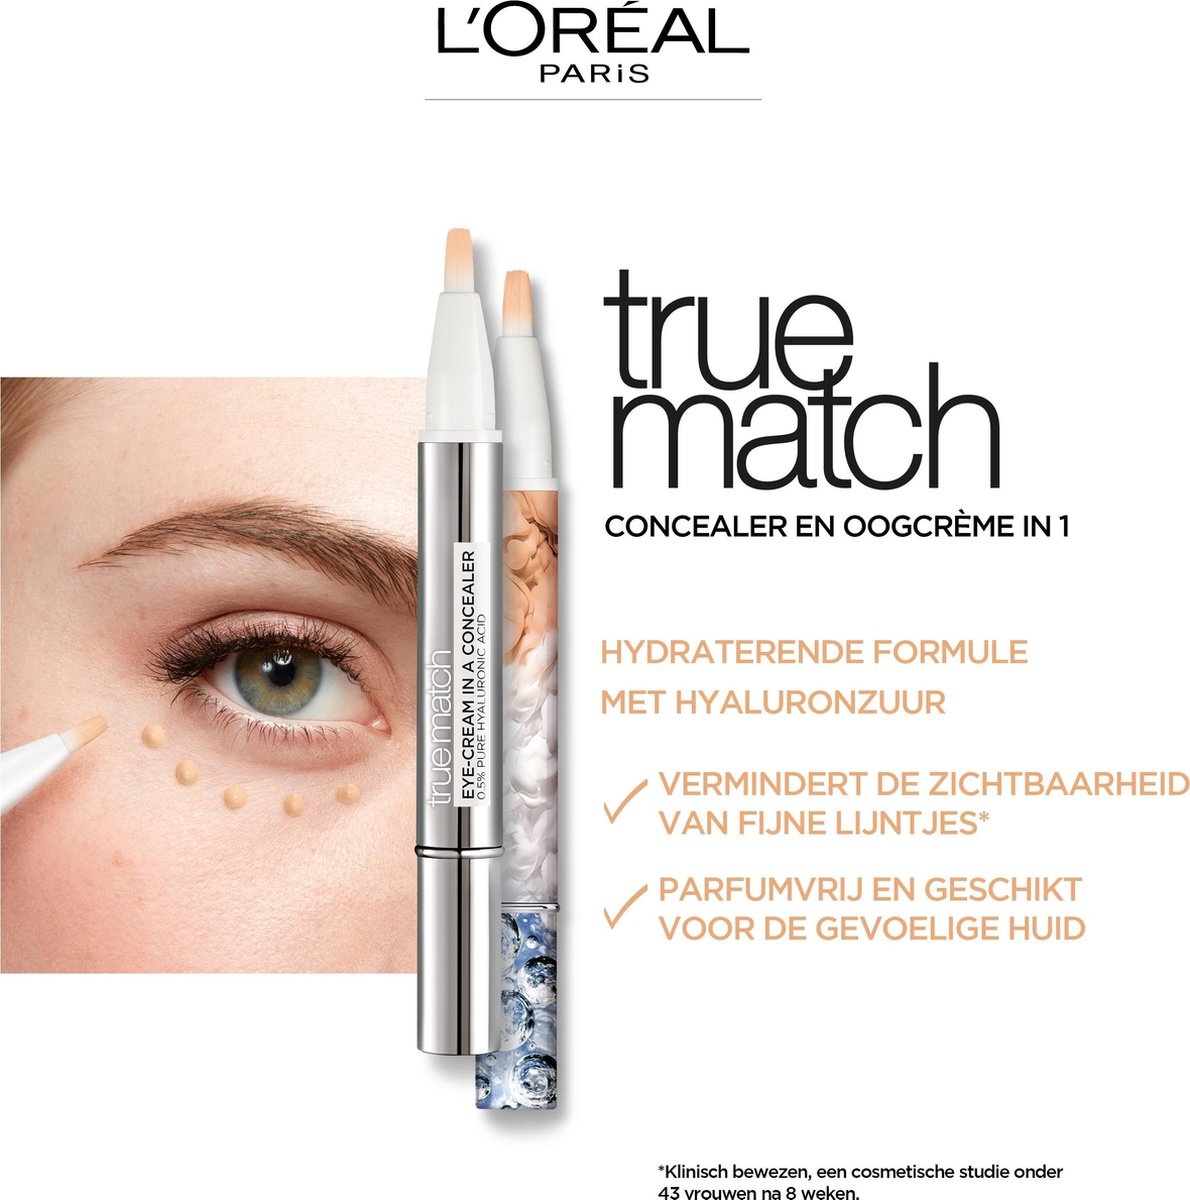 L'Oréal Paris True Match Touche Magique Concealer - N3-5 Natural Beige - Concealer und Augencreme in 1, angereichert mit 0,5 % Hyaluronsäure